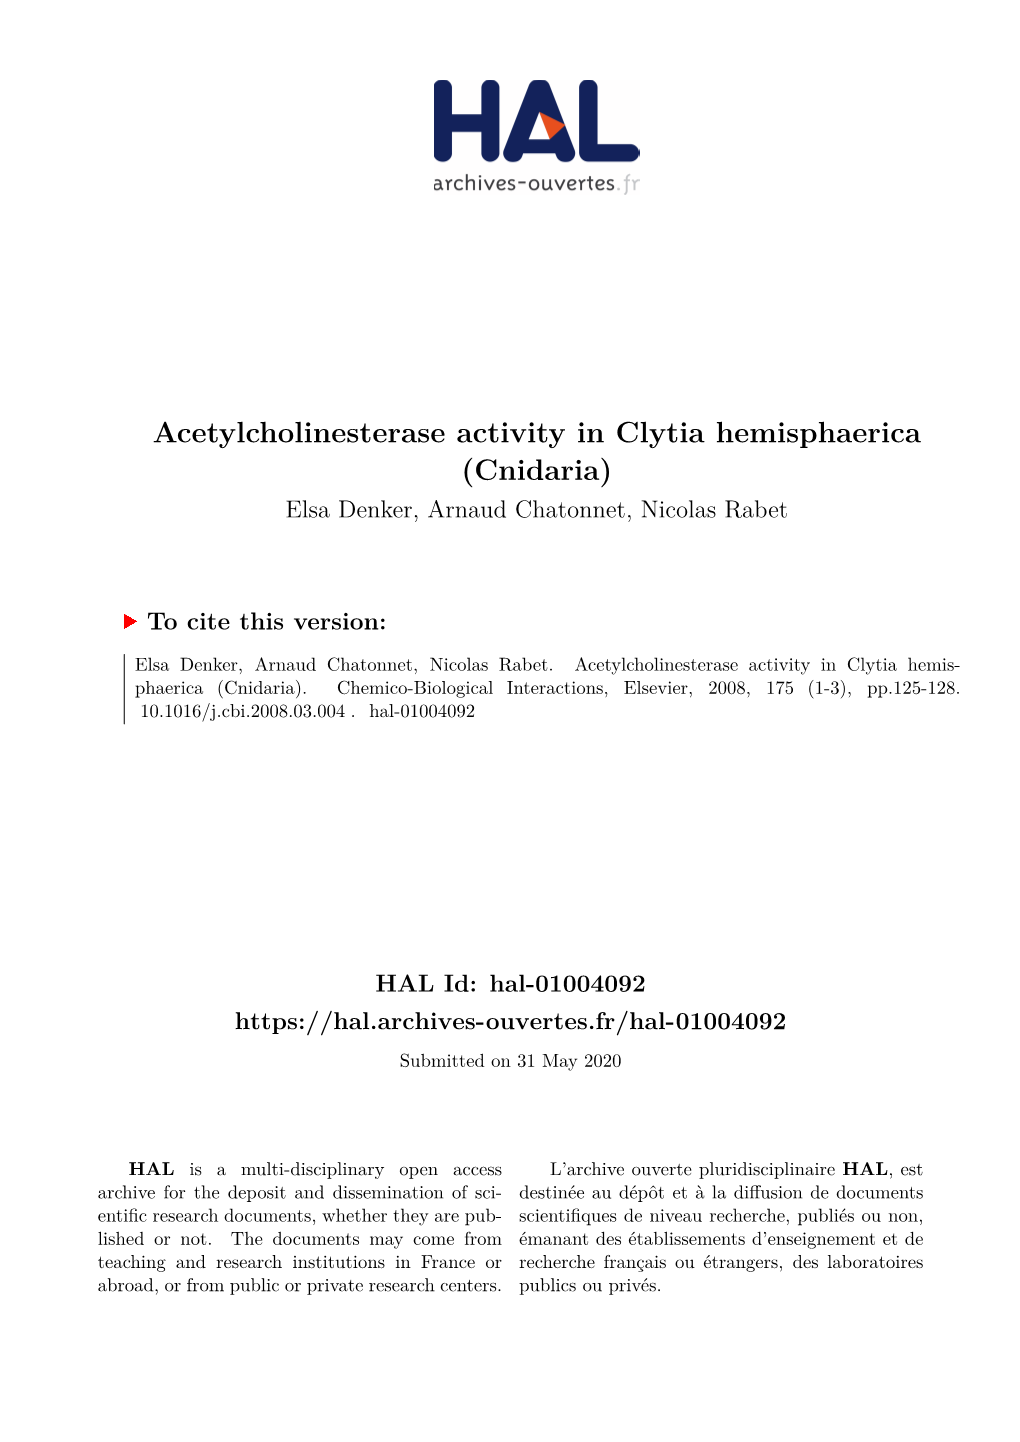 Acetylcholinesterase Activity in Clytia Hemisphaerica (Cnidaria) Elsa Denker, Arnaud Chatonnet, Nicolas Rabet